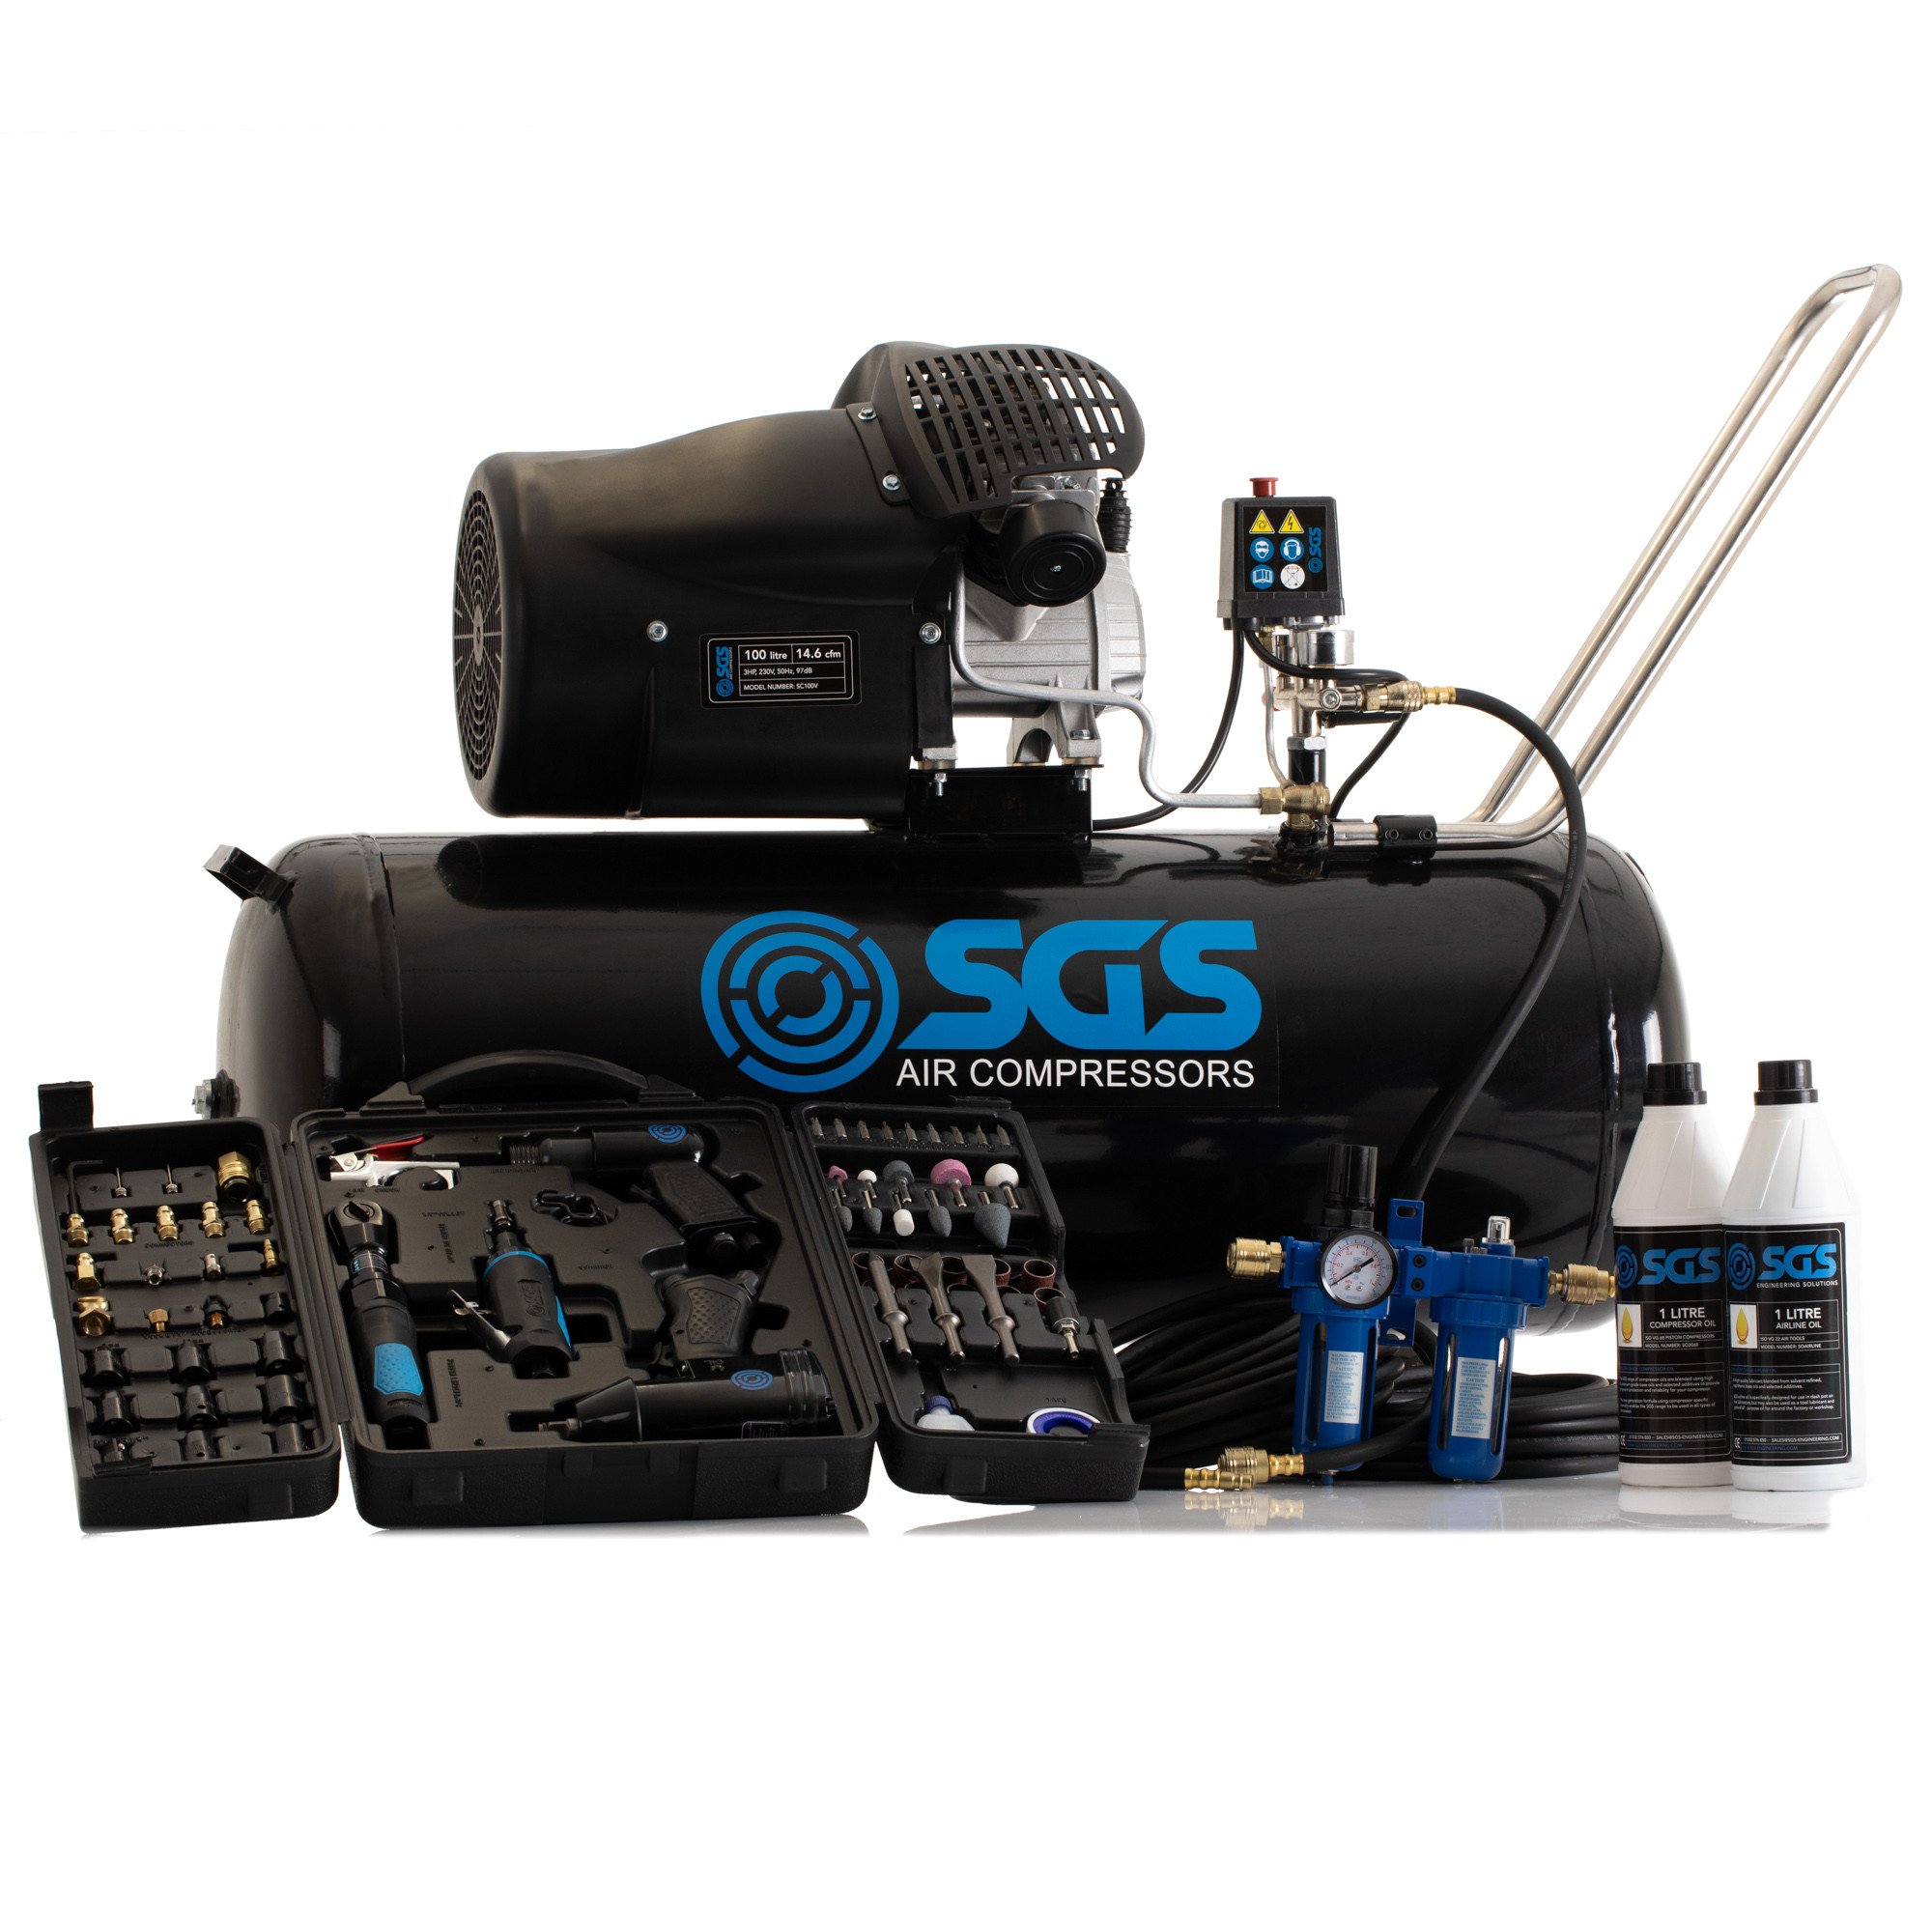 SGS 100升直接驱动空气压缩机和71pcs空气工具套件-14.6CFM 3.0HP 100L